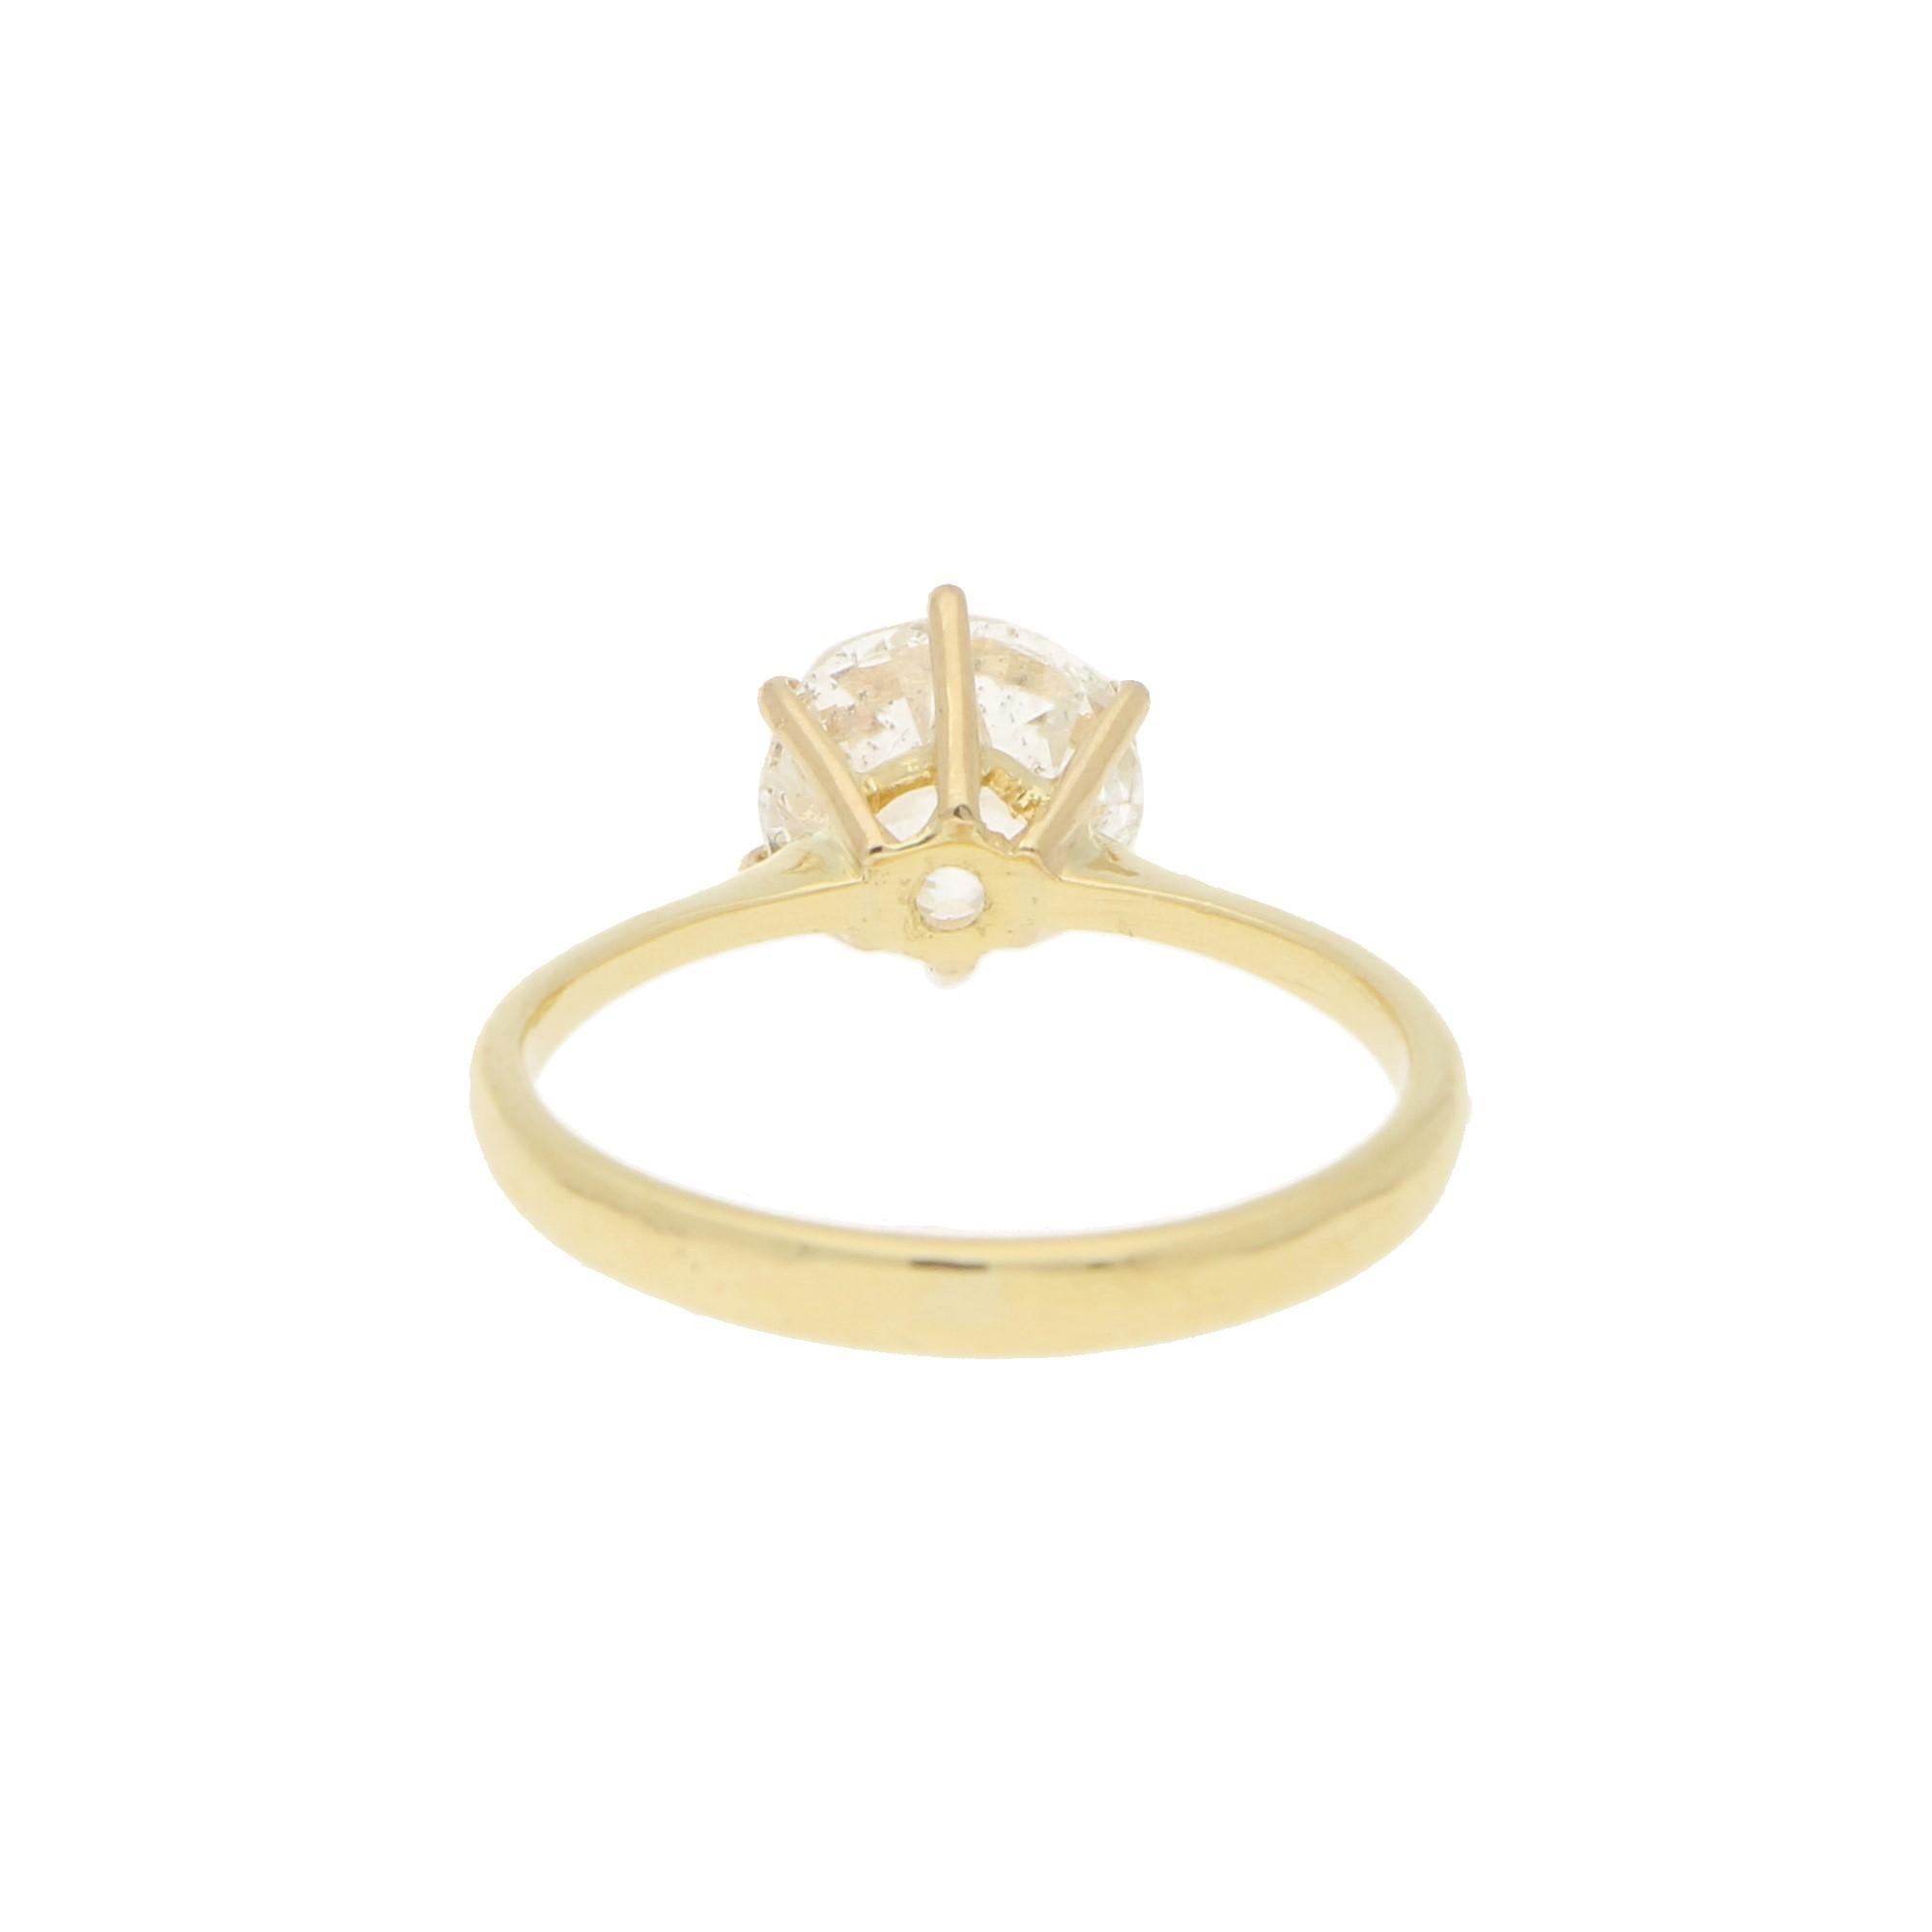 Modern Old Mine Cut Diamond Engagement Ring Set in 18 Karat Yellow Gold